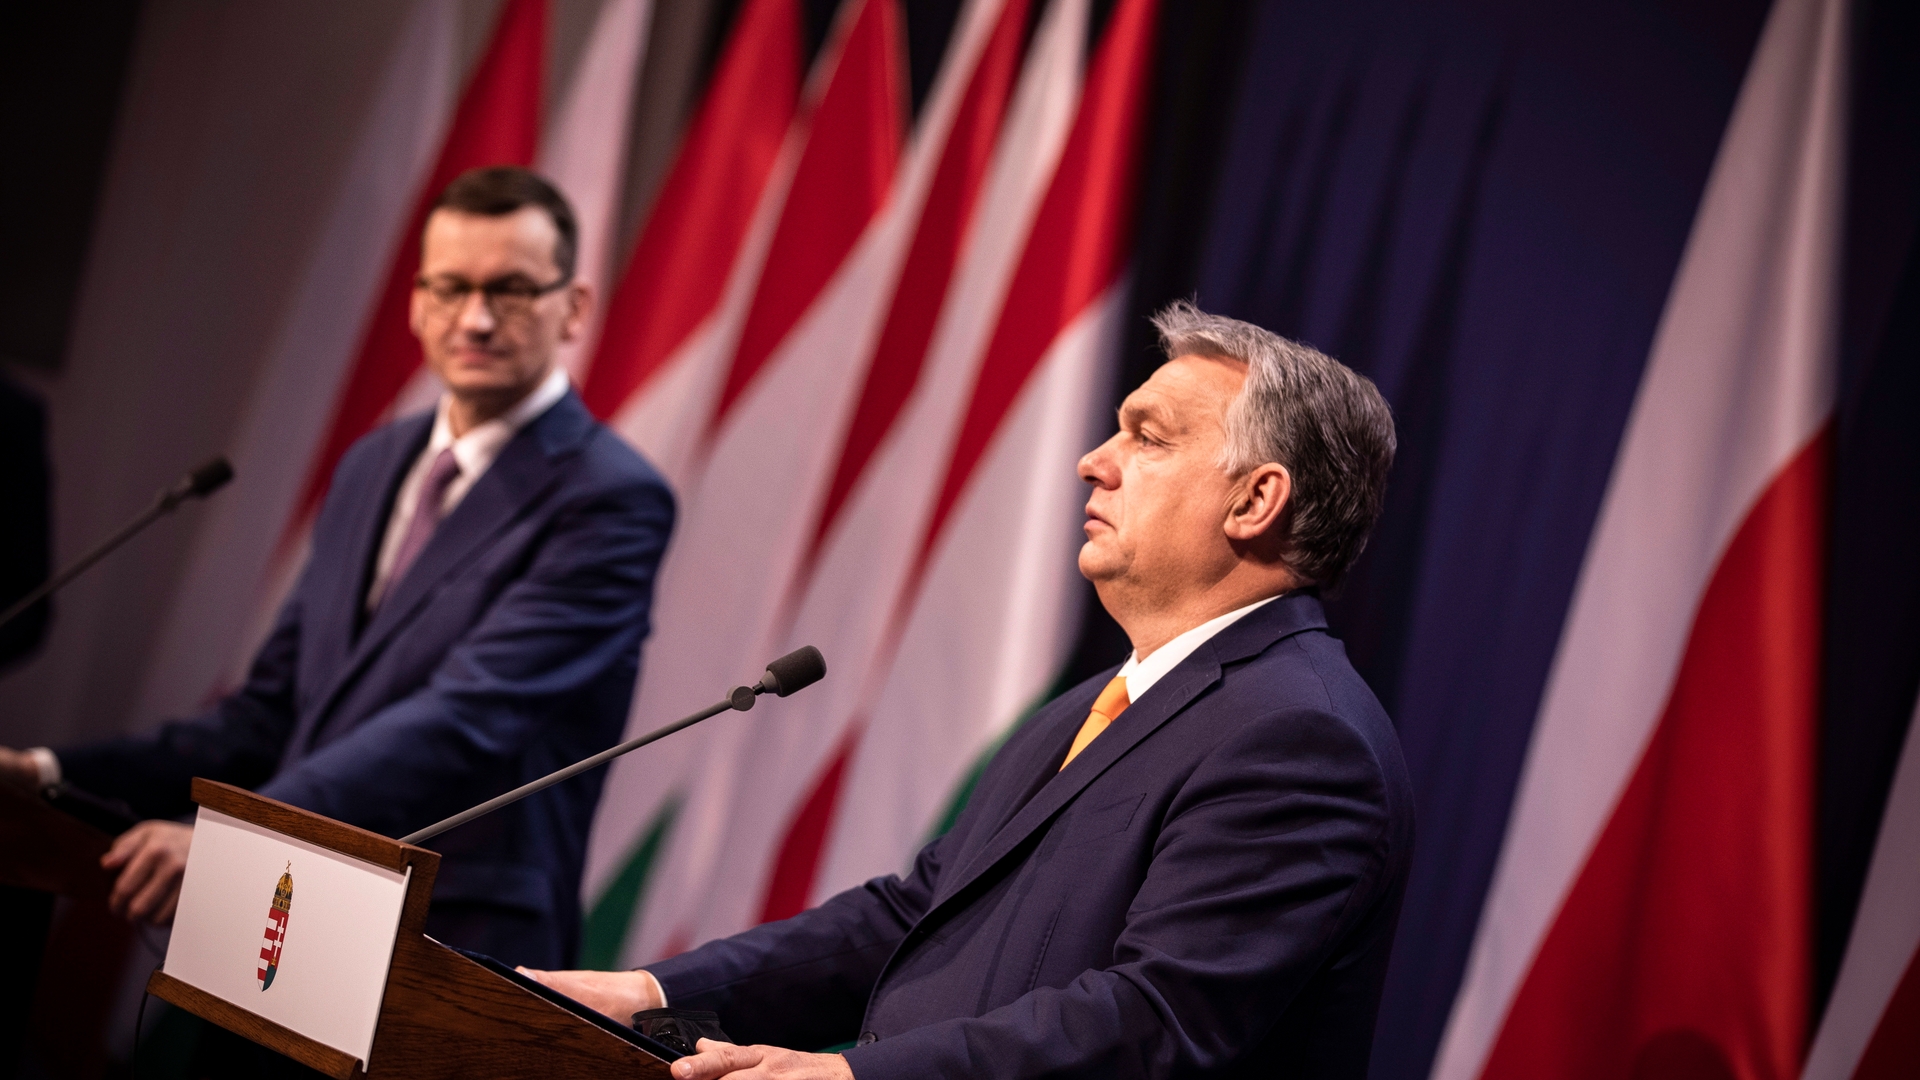 Polish Prime Minister Mateusz Morawiecki visit